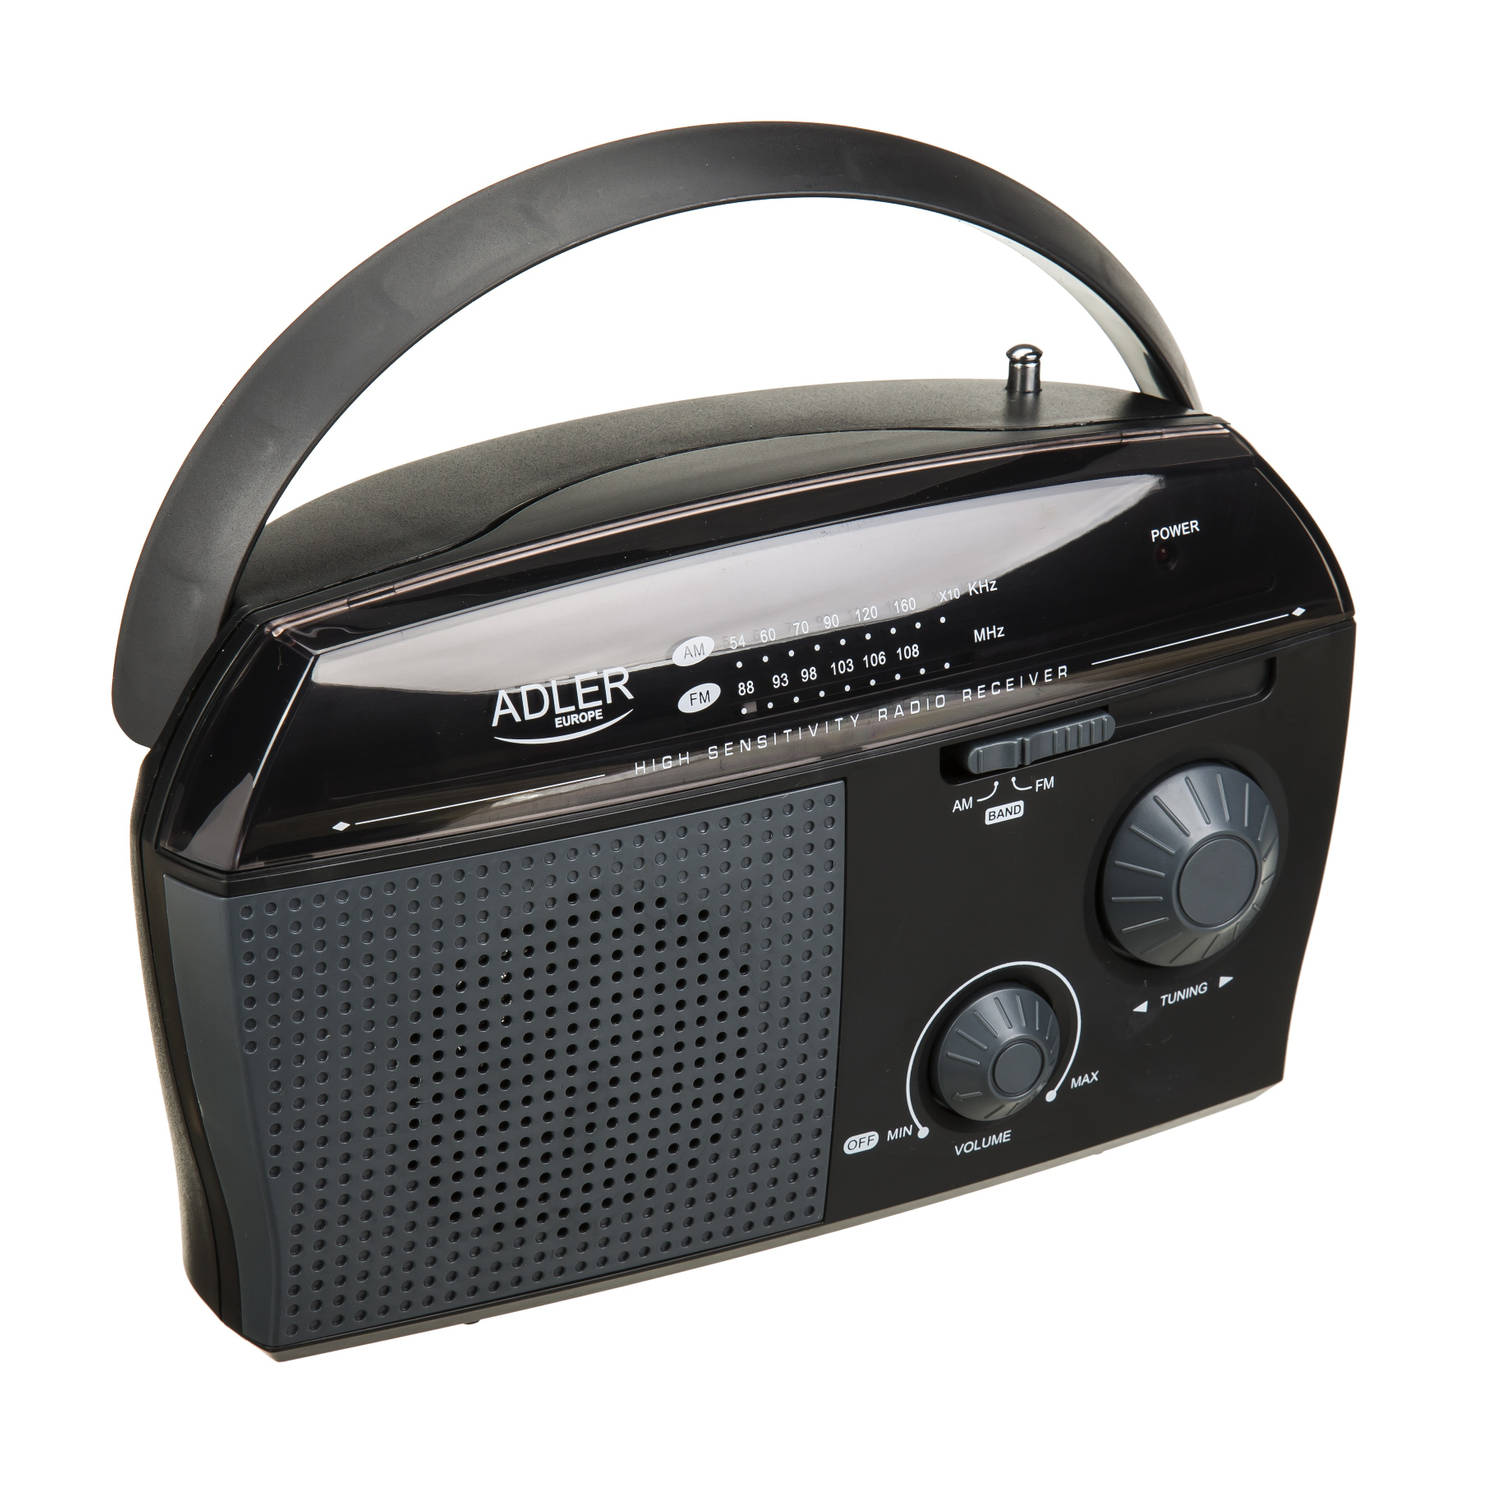 tekort Bestrooi Piket Adler AD 1119 kleine portable radio | Blokker